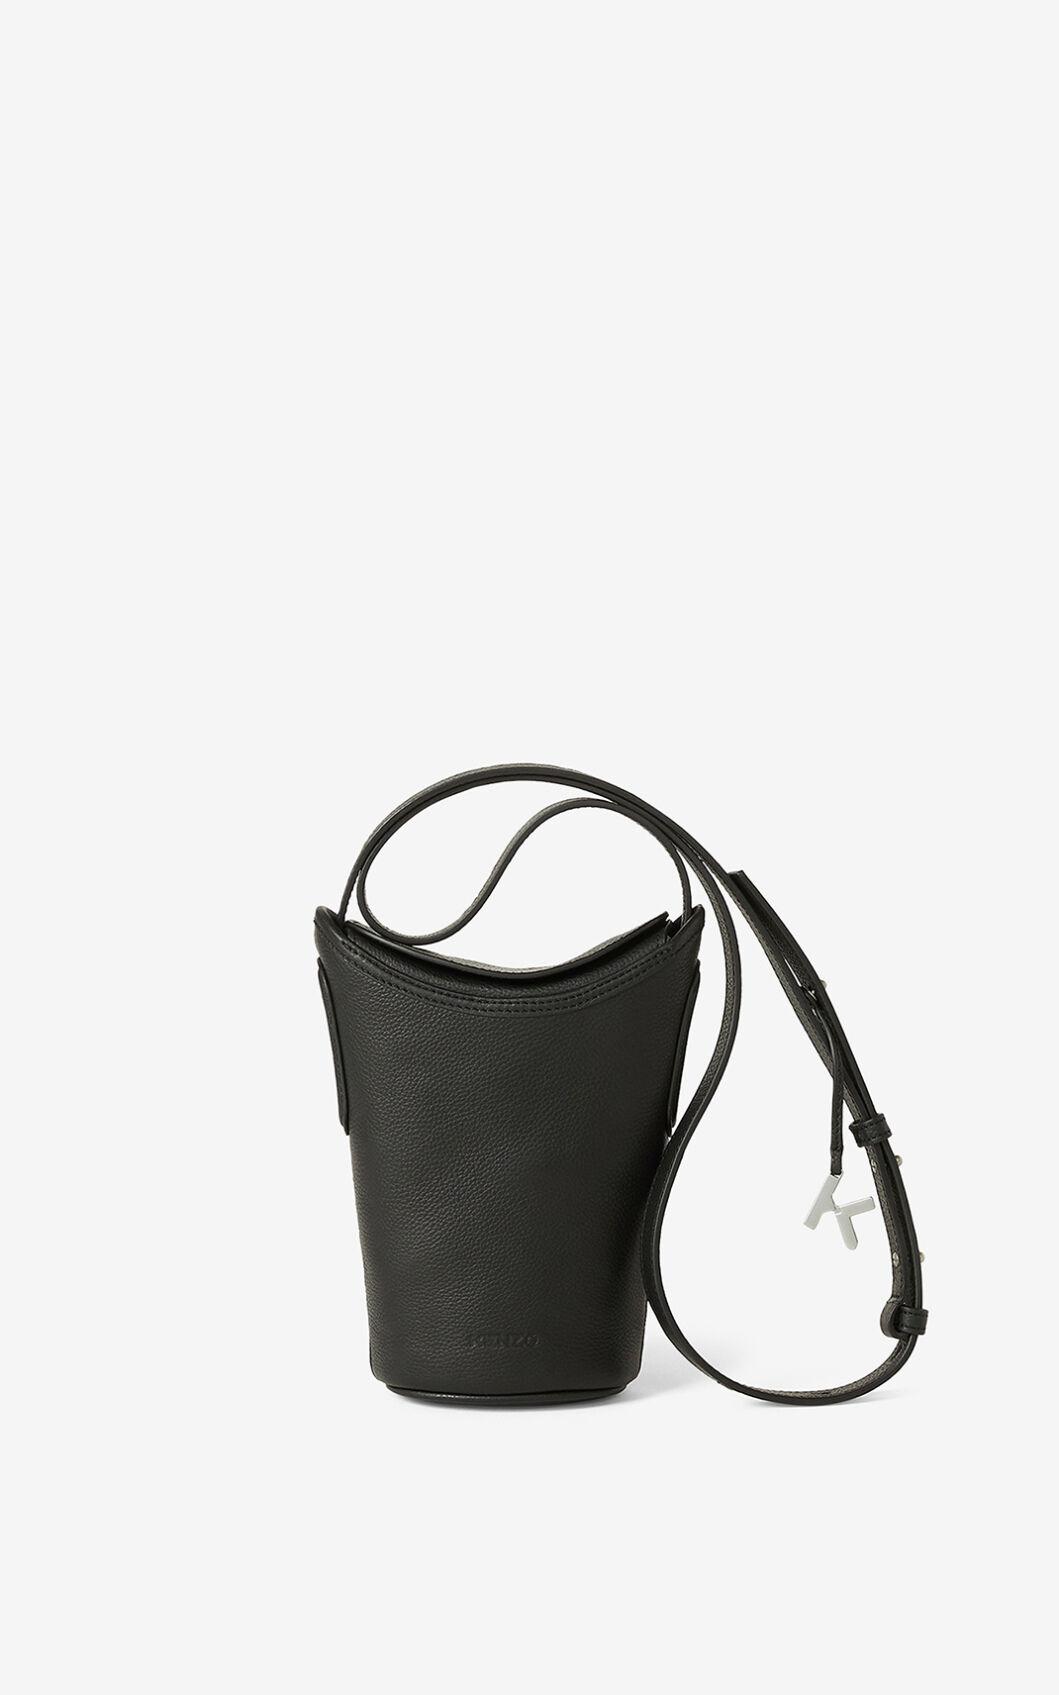 KENZO Small Onda Leather Bucket Bag in Black - Lyst